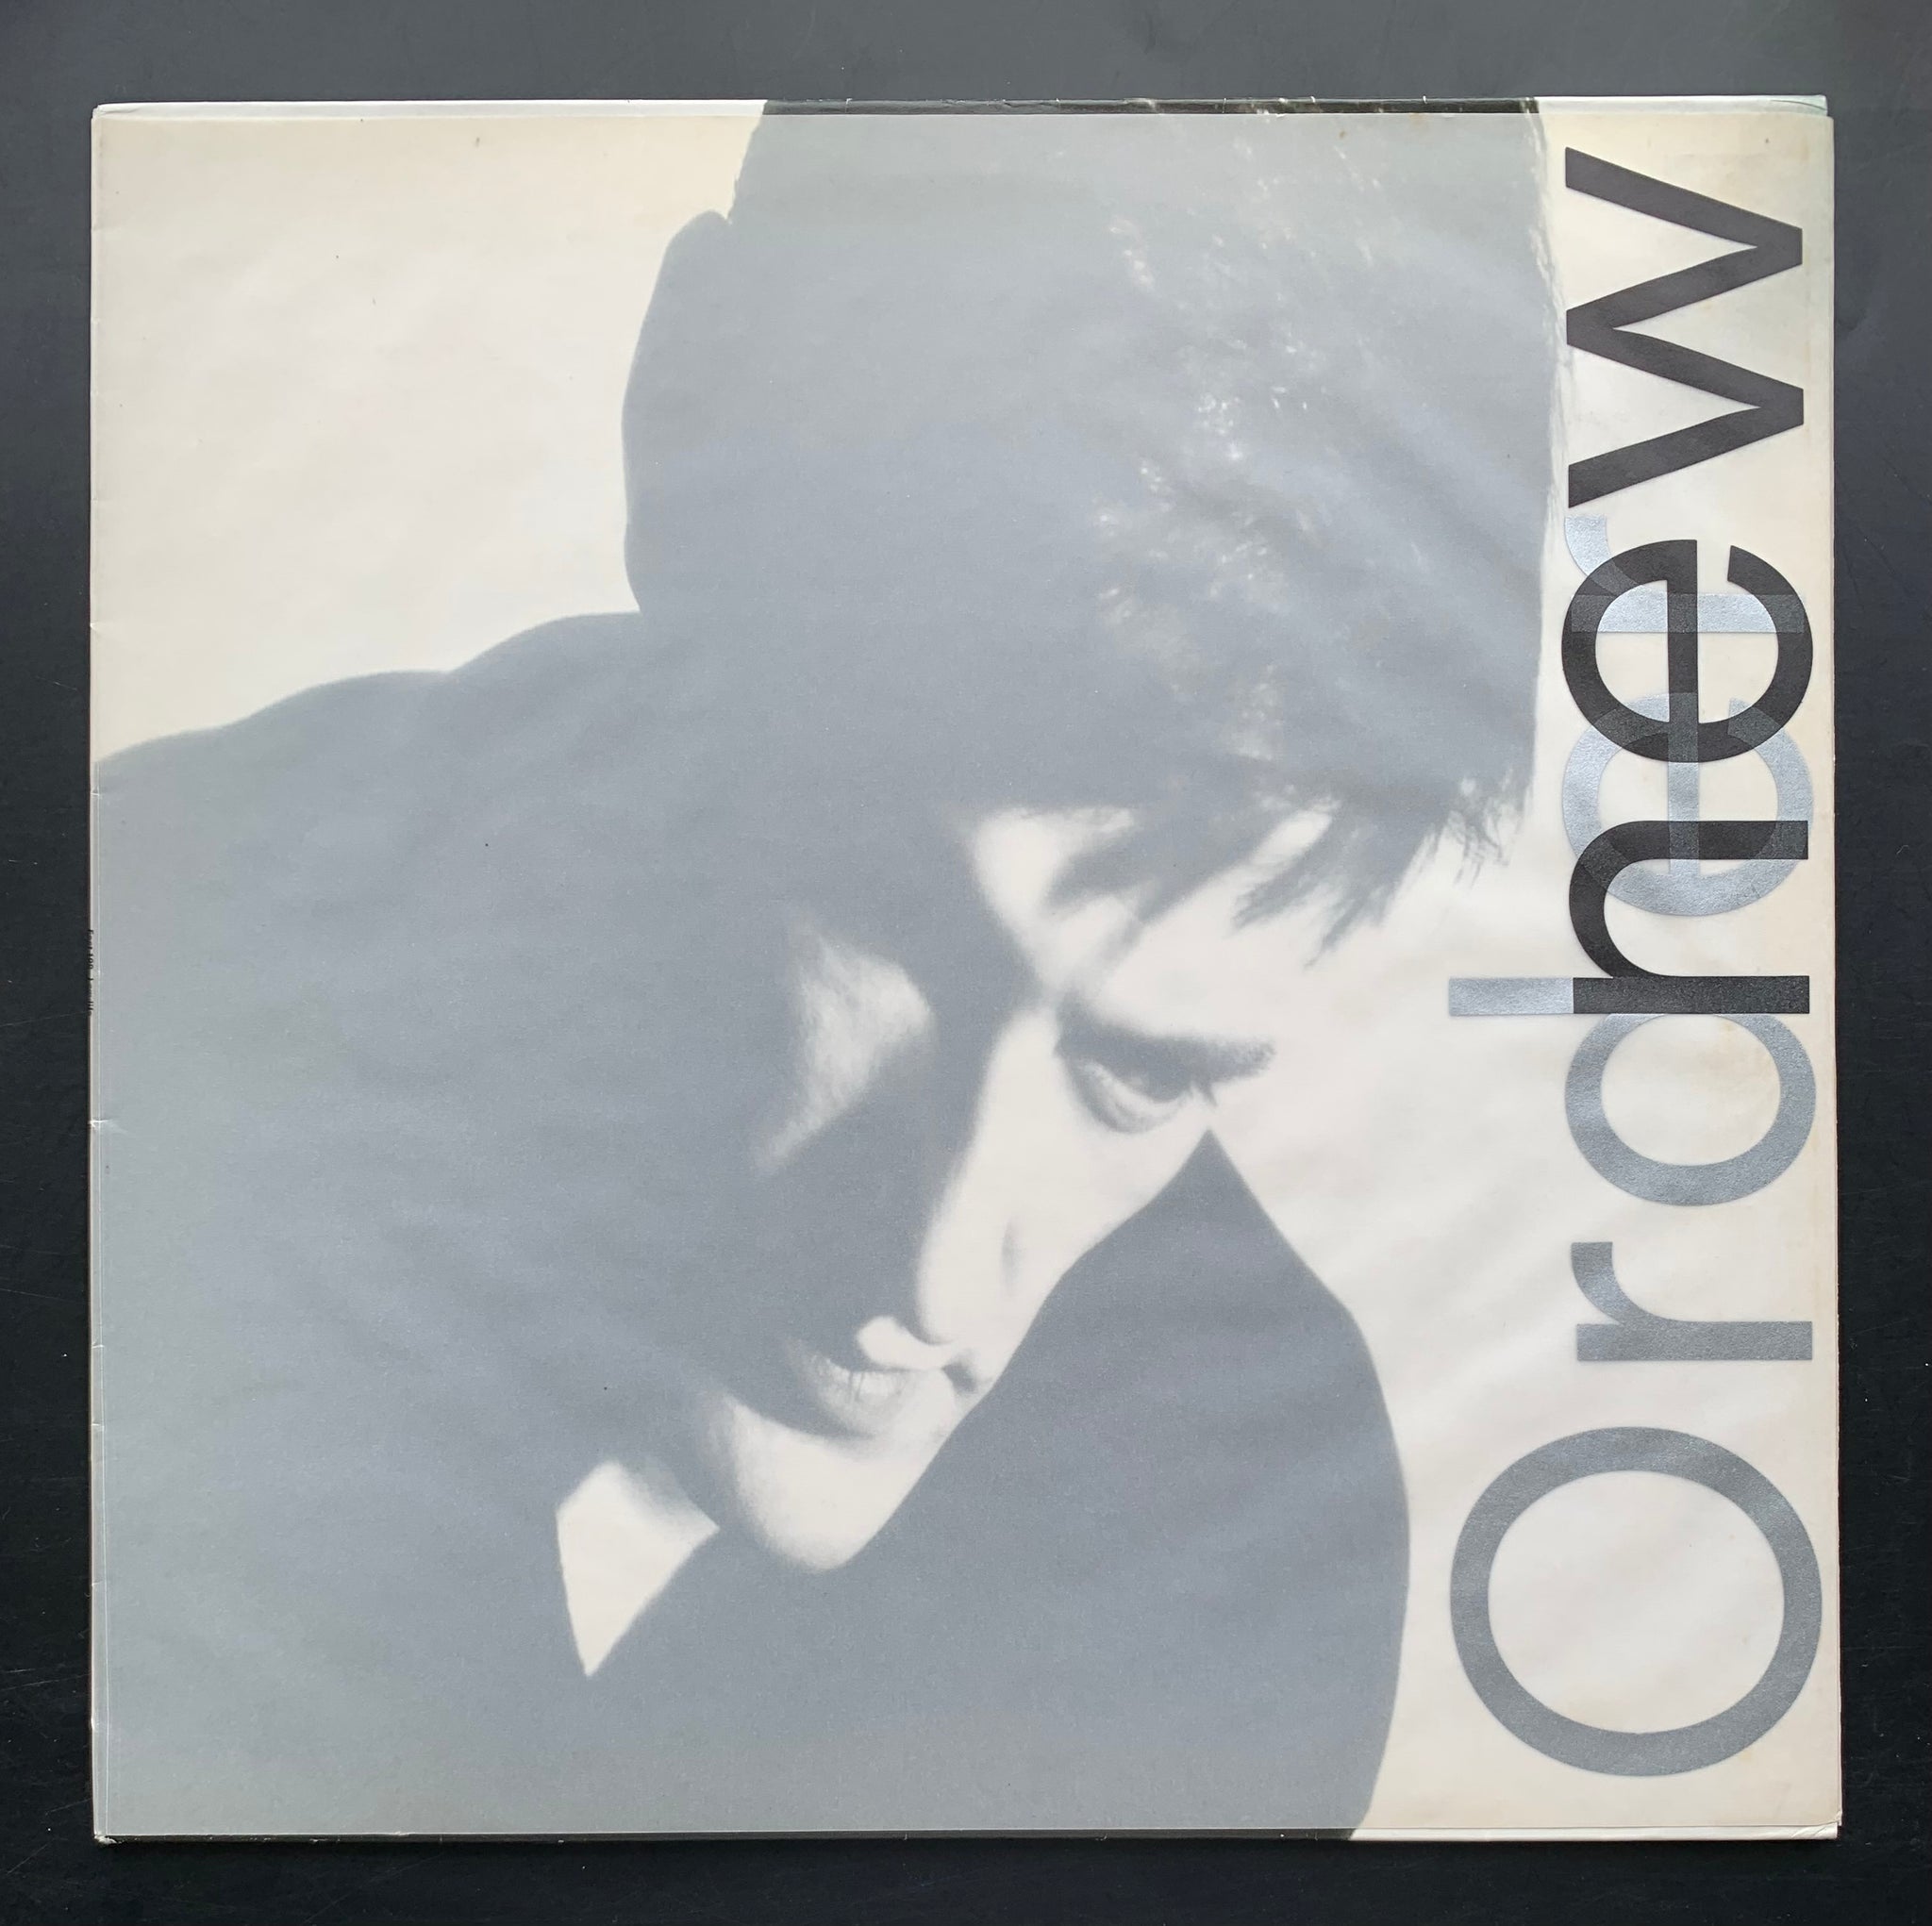 New Order 'Low-life' LP